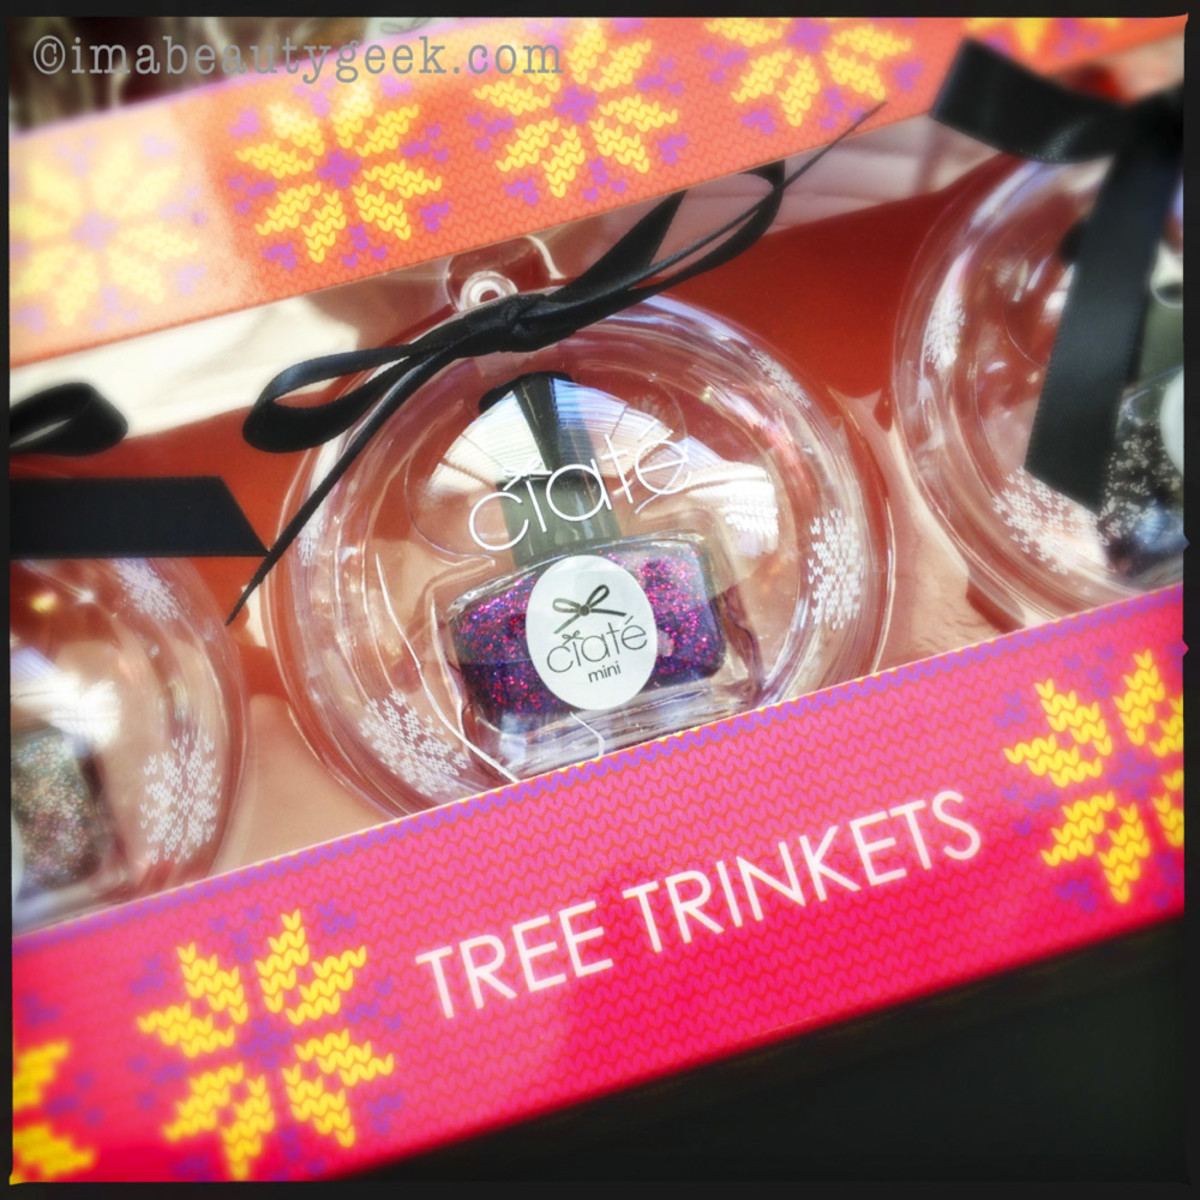 Ciate Tree Trinkets Ball_photo Karen Falcon